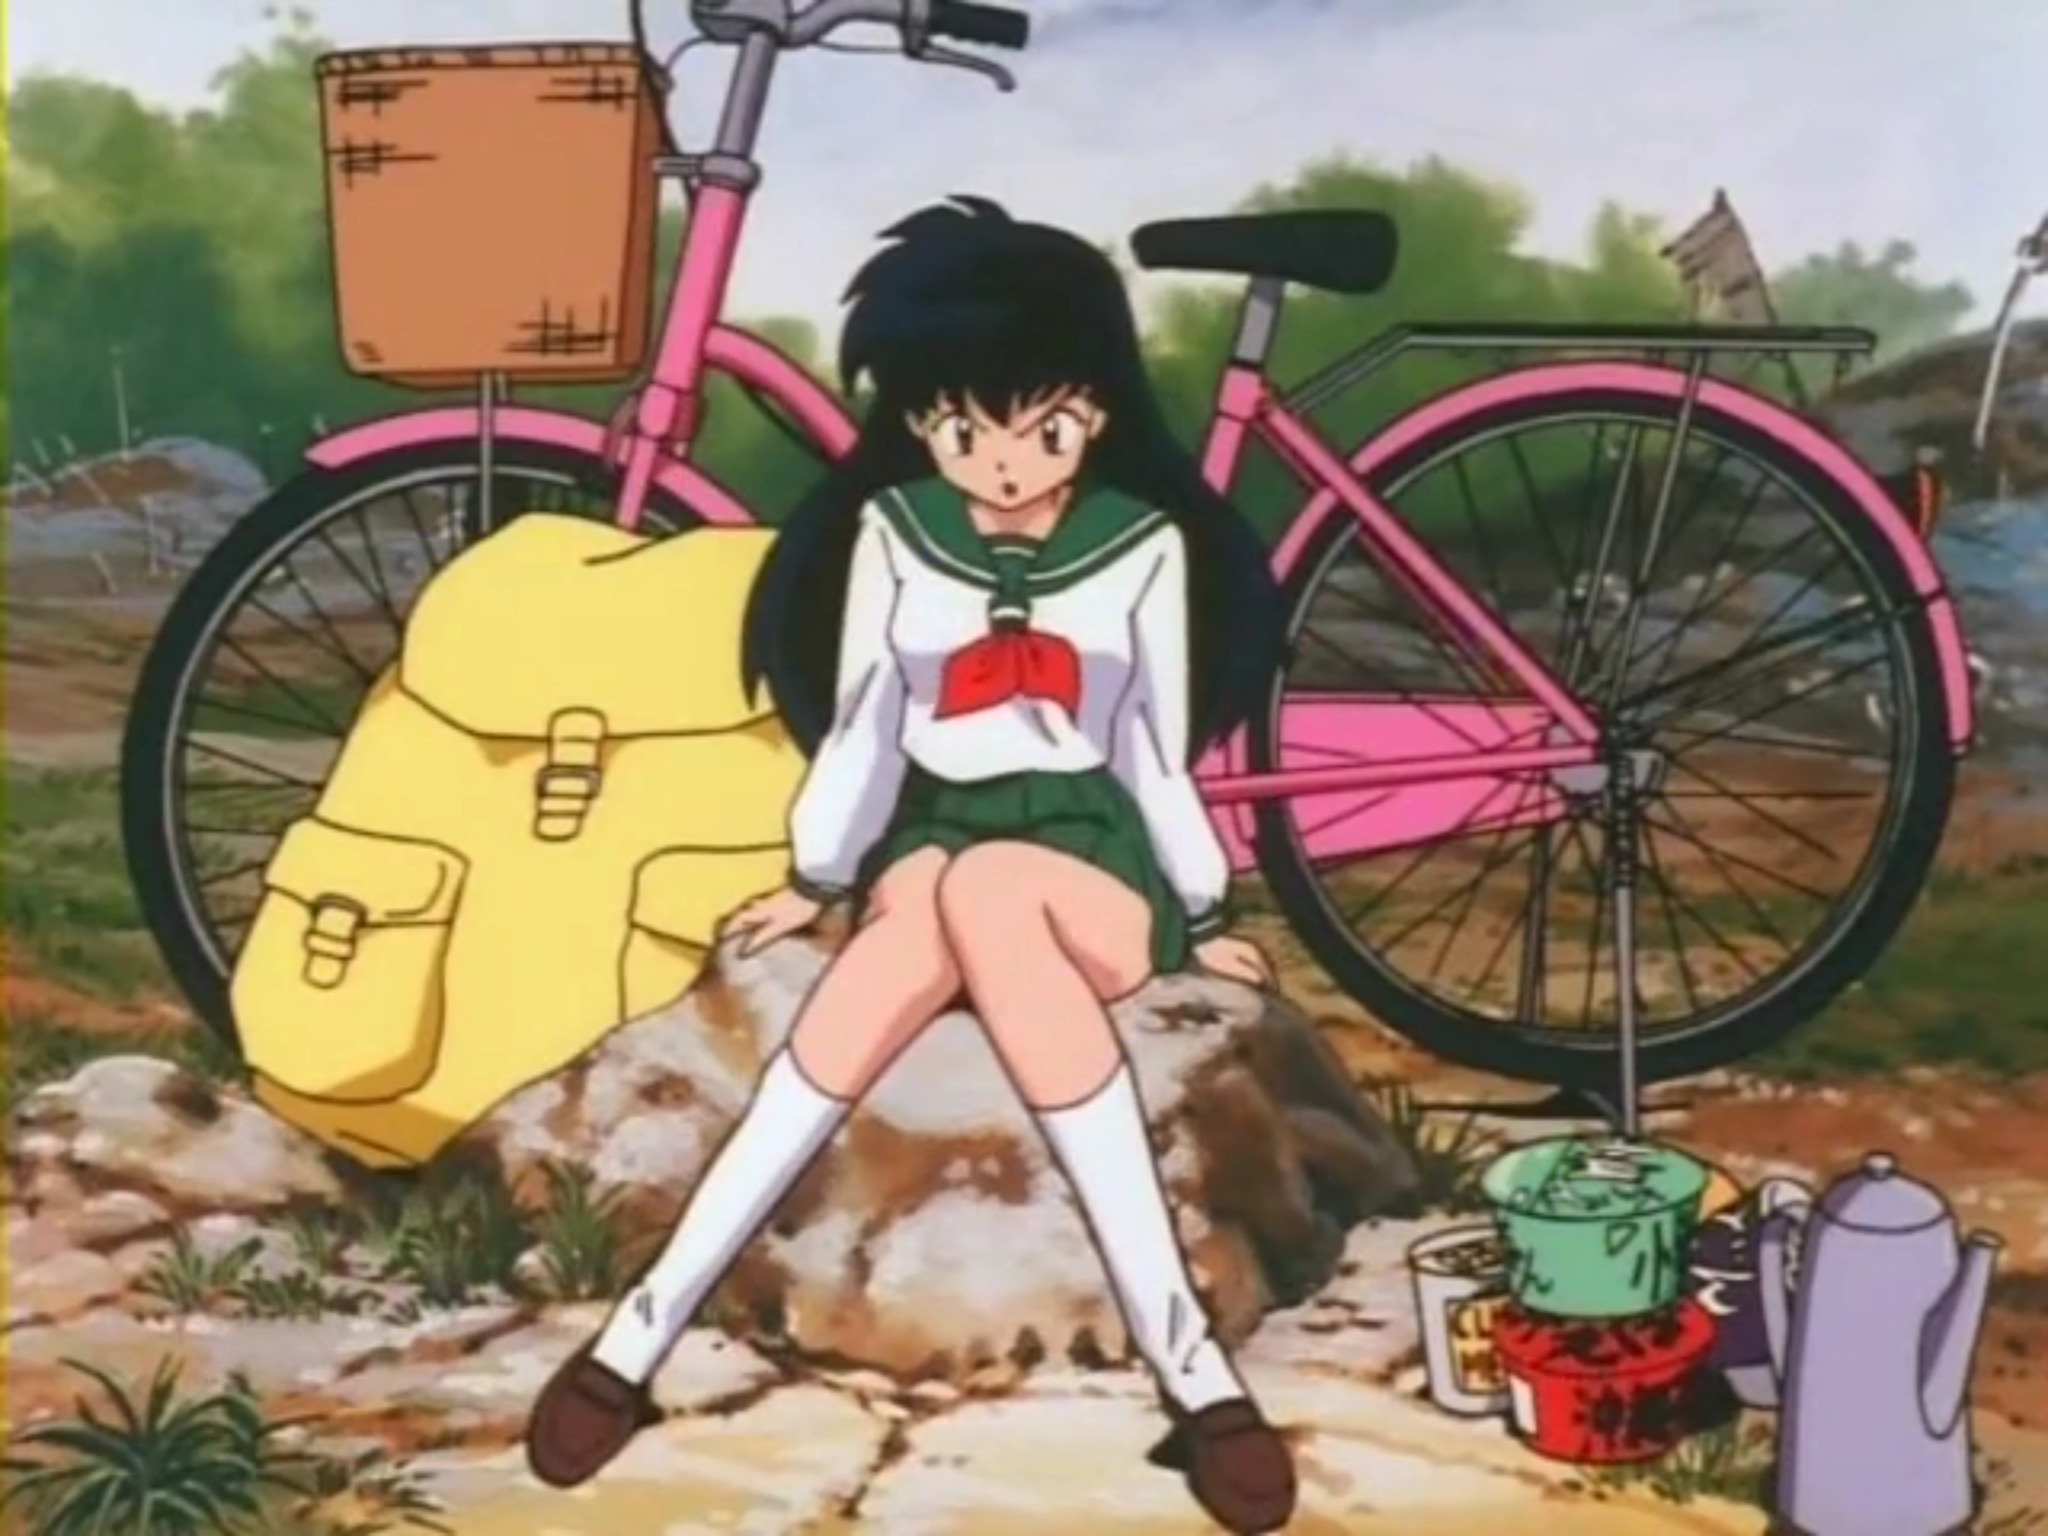 Kagome and her bicycle Inuyasha